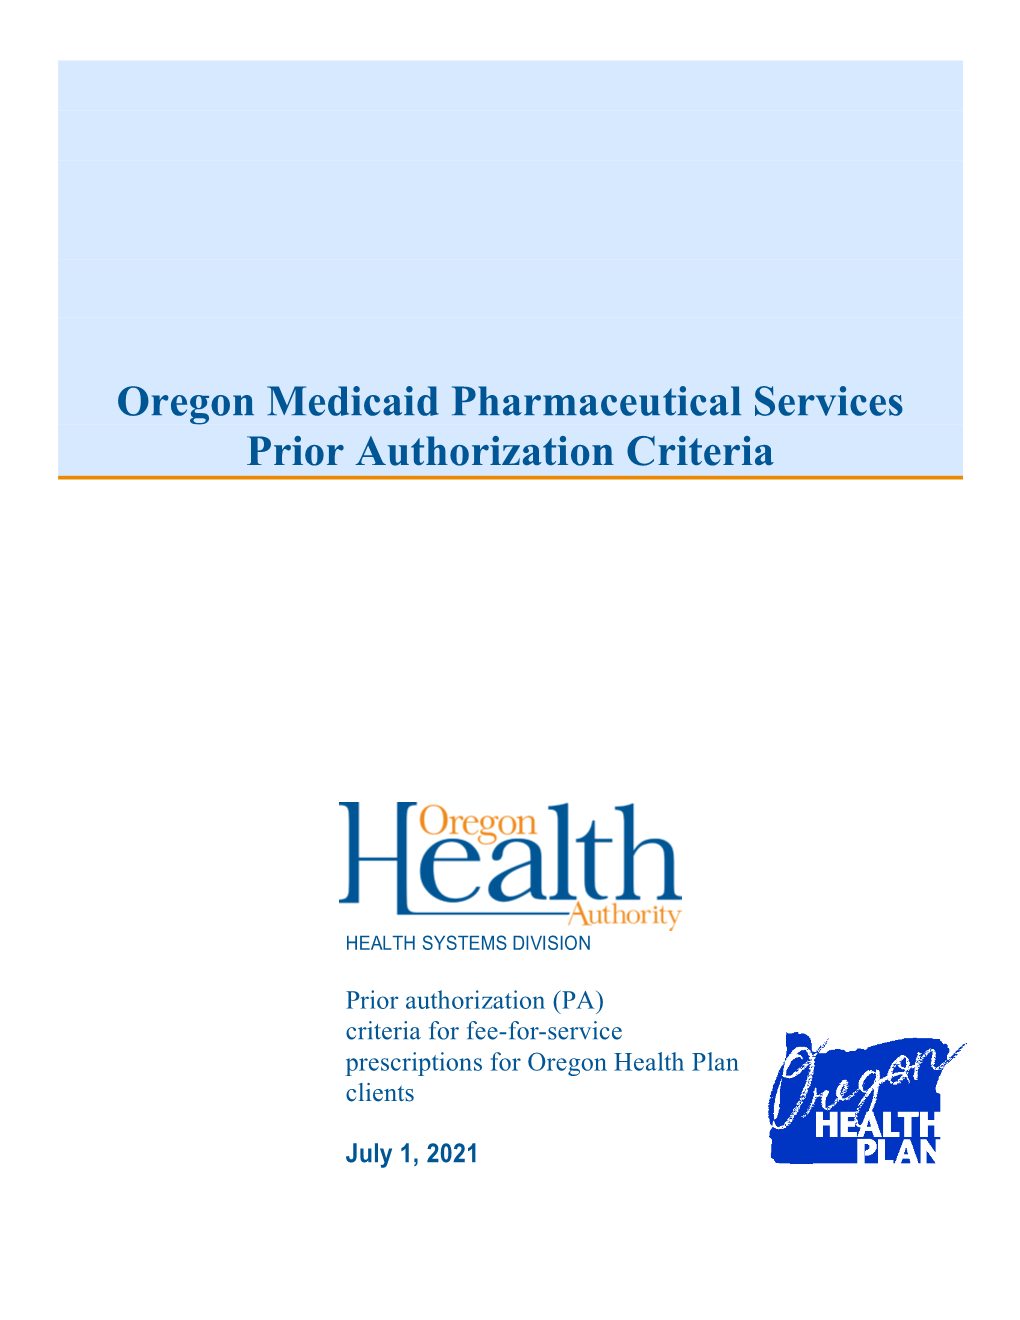 Oregon Medicaid PA Criteria, July 1, 2021.Pdf